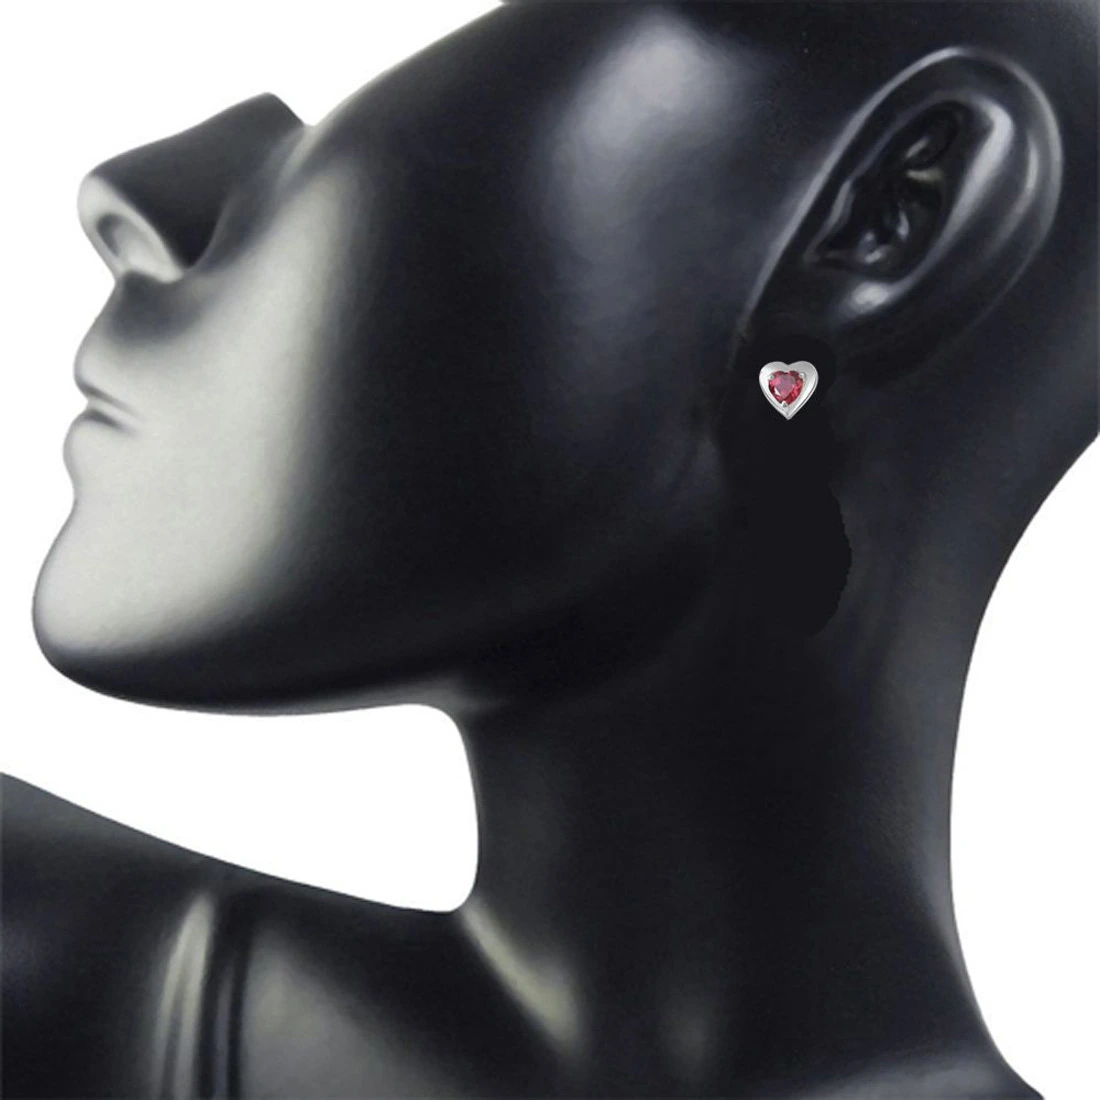 Heart Shaped Red Garnet & Sterling Silver Earrings for Women (SDS49)